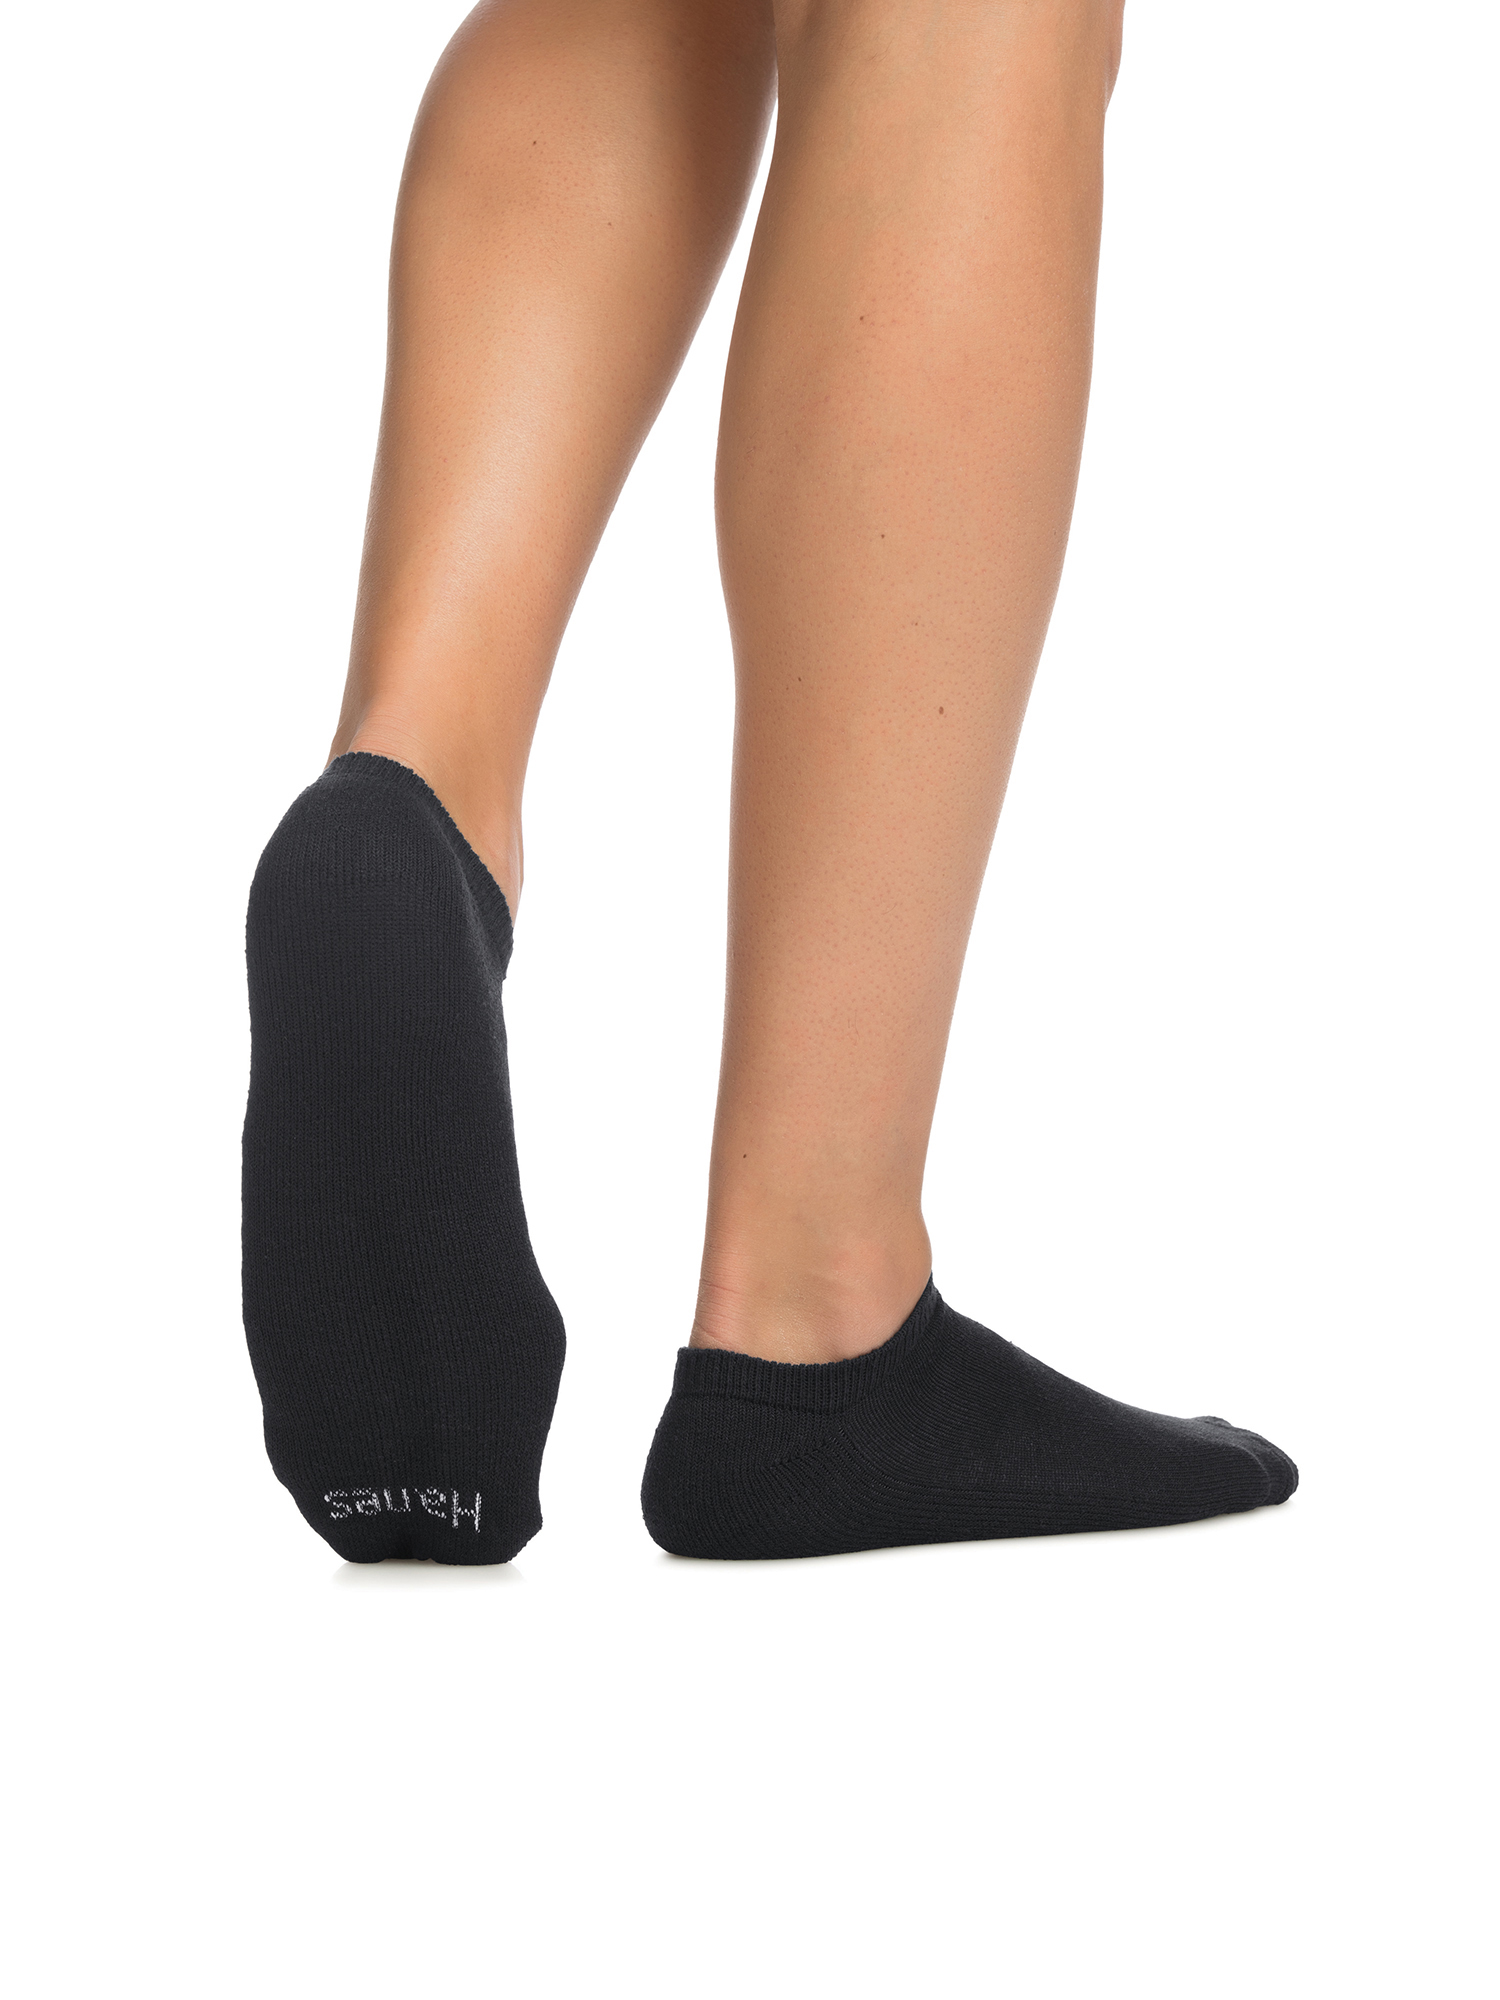 Hanes Men's Cushion No Show Socks, 12 Pack - image 1 of 8